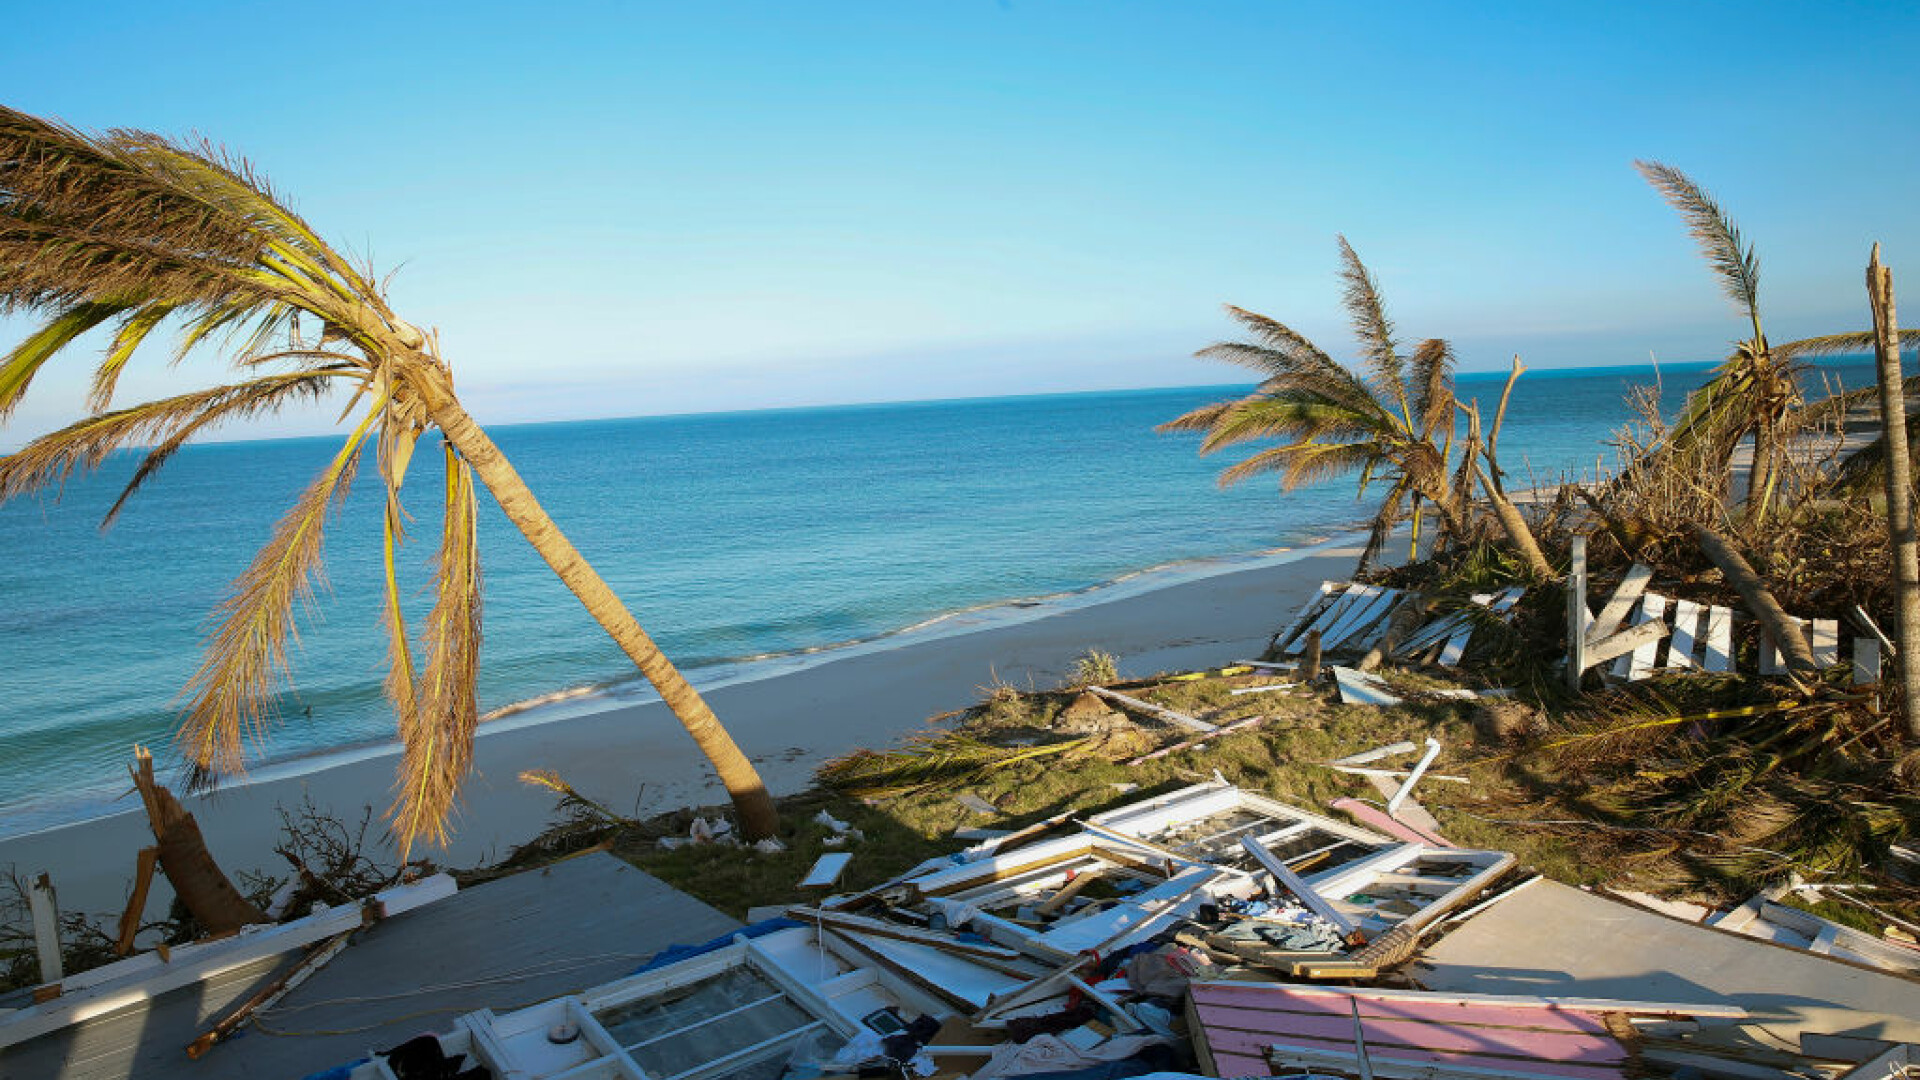 Uraganul Dorian a făcut 43 de victime în Bahamas